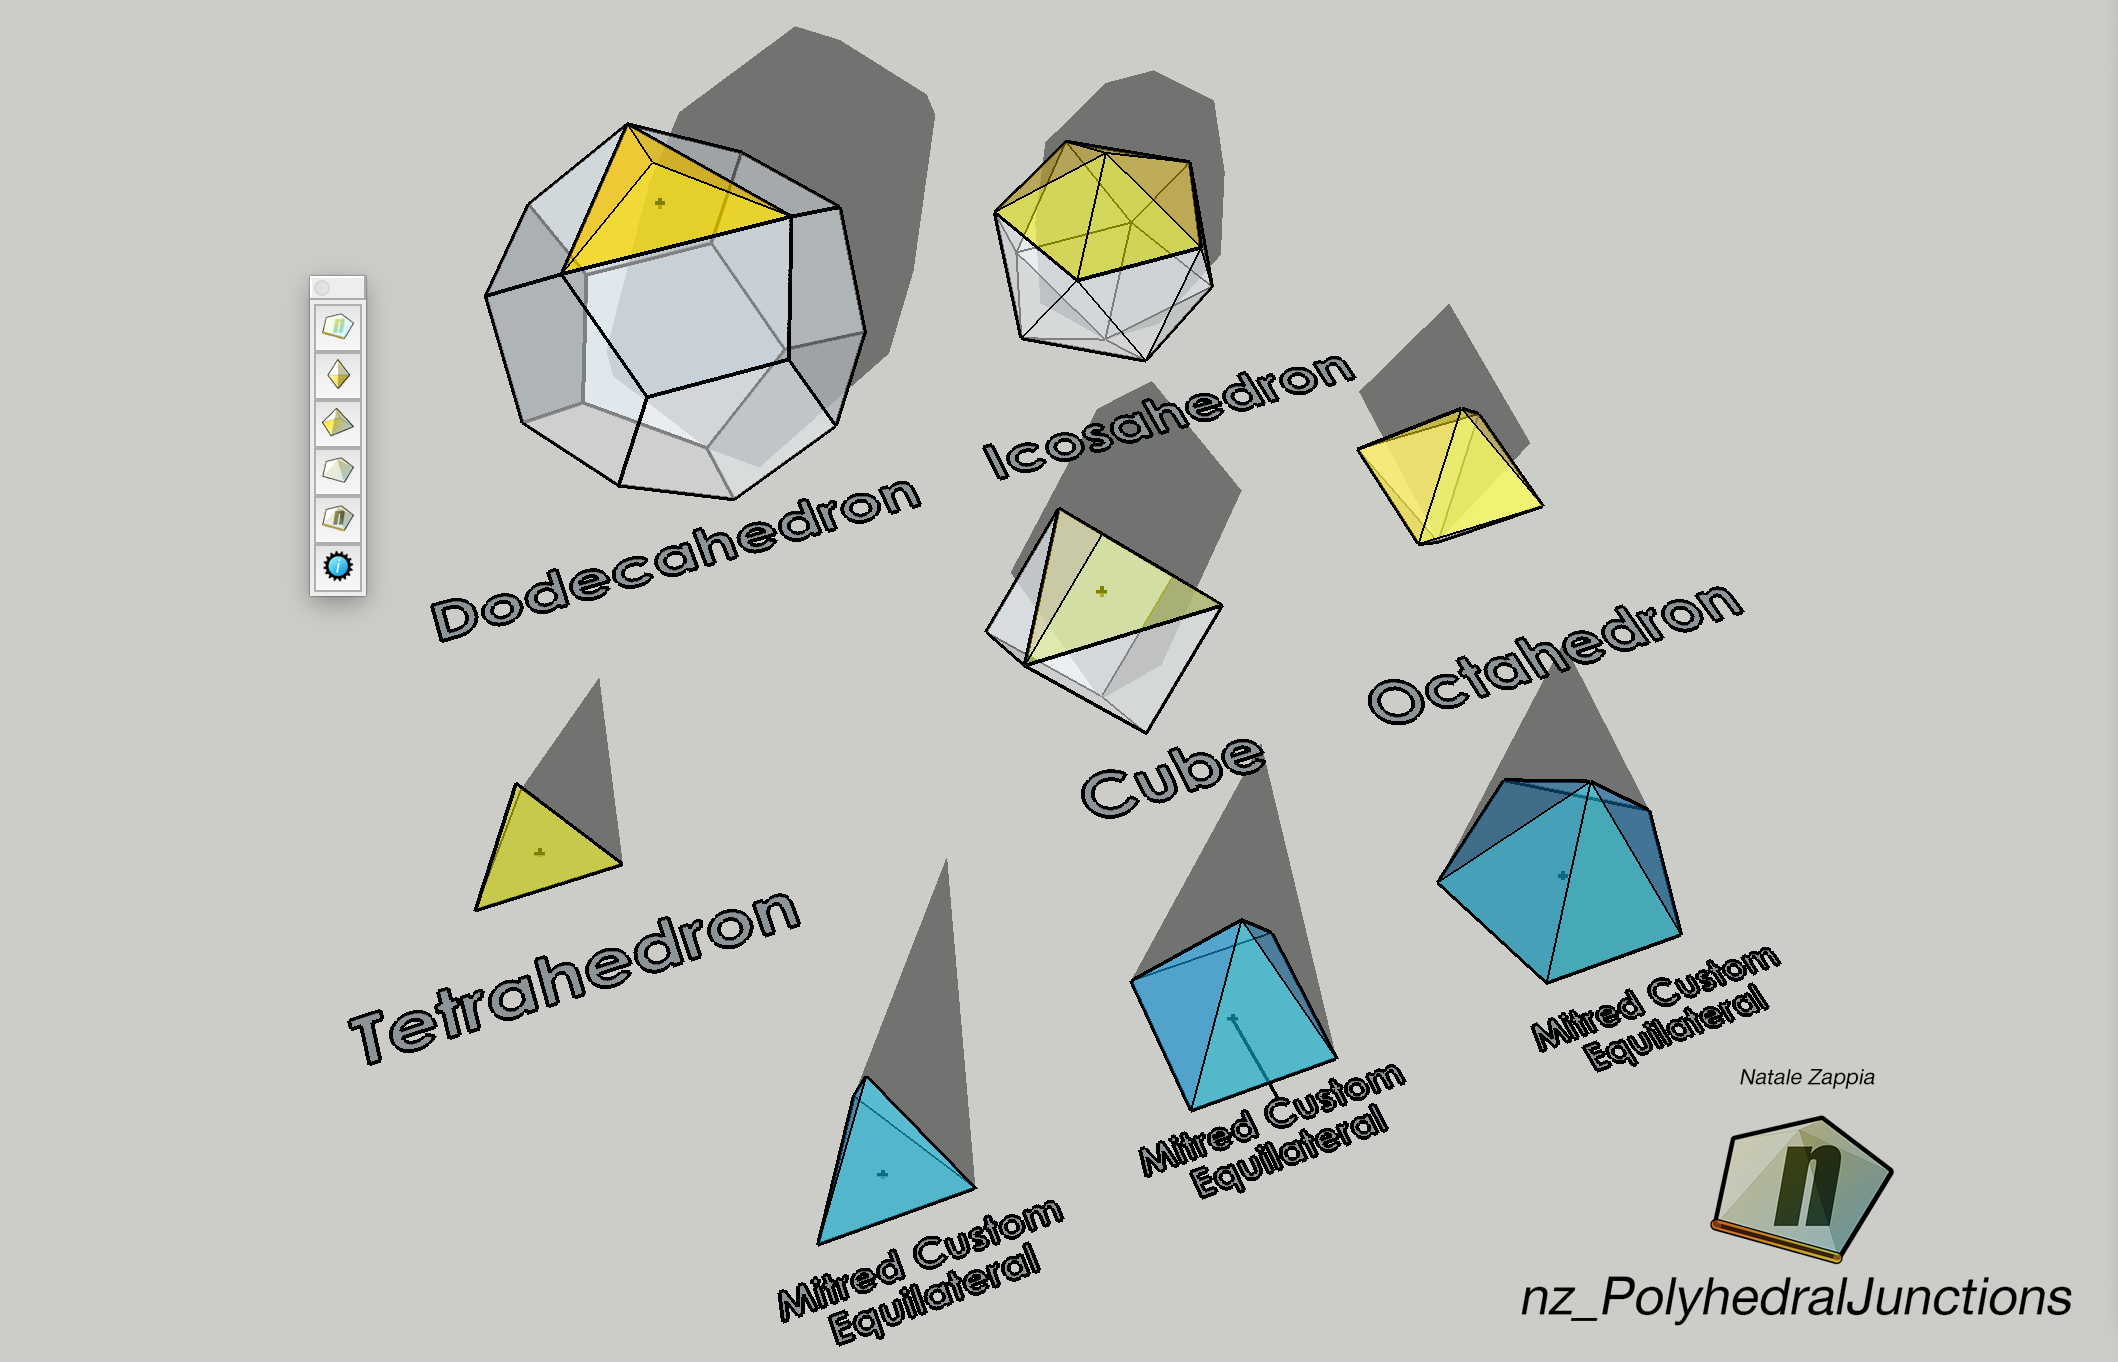 nz_PolyhedralJunctions